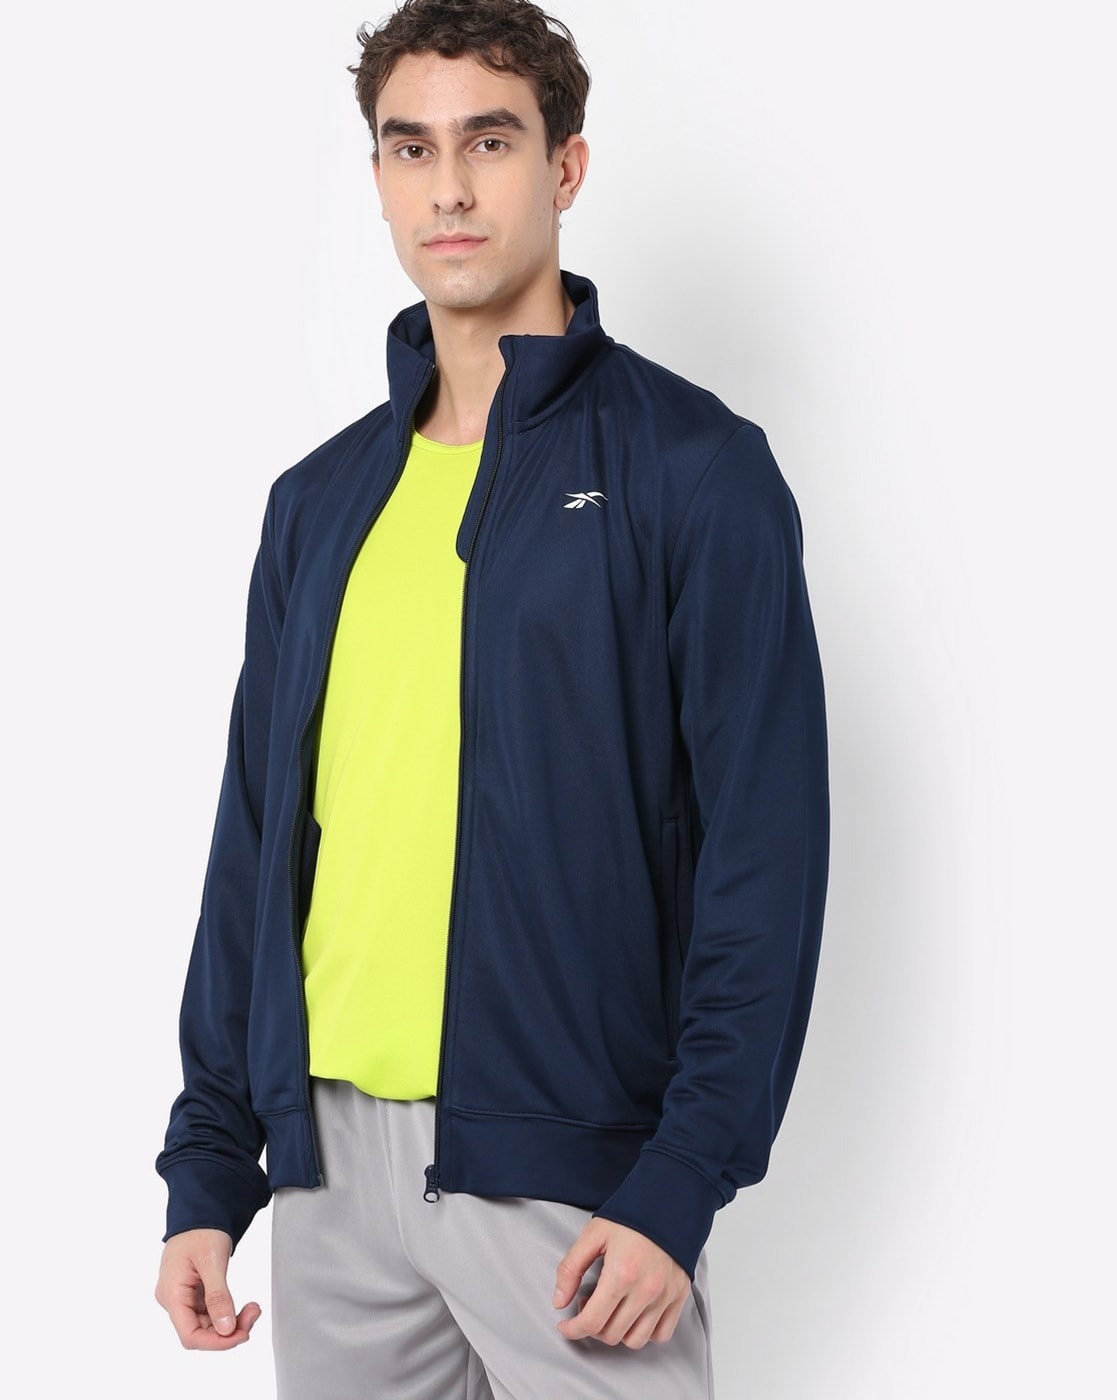 Buy Blue Jackets & Coats for Men by Reebok Online | Ajio.com